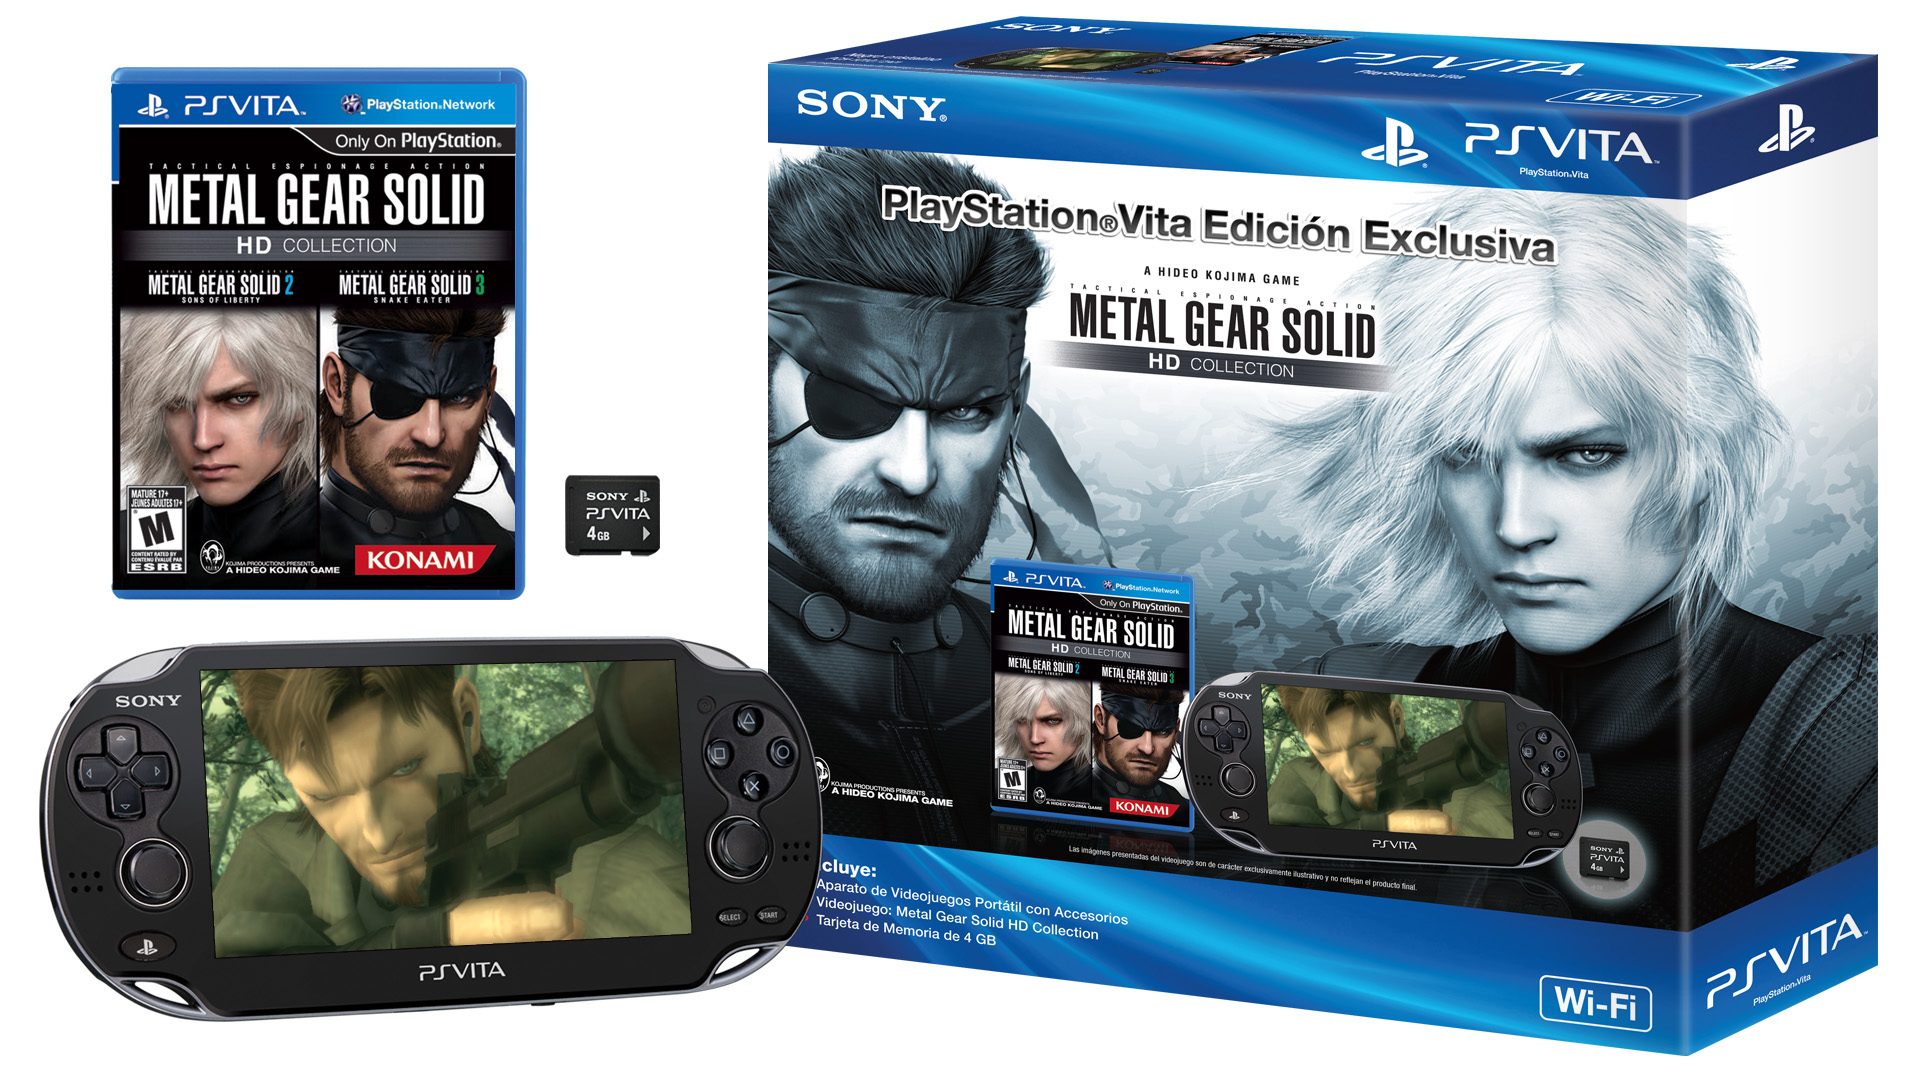 Vita collection. MGS 2 PS Vita. MGS 3 PS Vita. PS Vita Edition Metal Gear Solid 2. Metal Gear Solid 3 PS Vita.